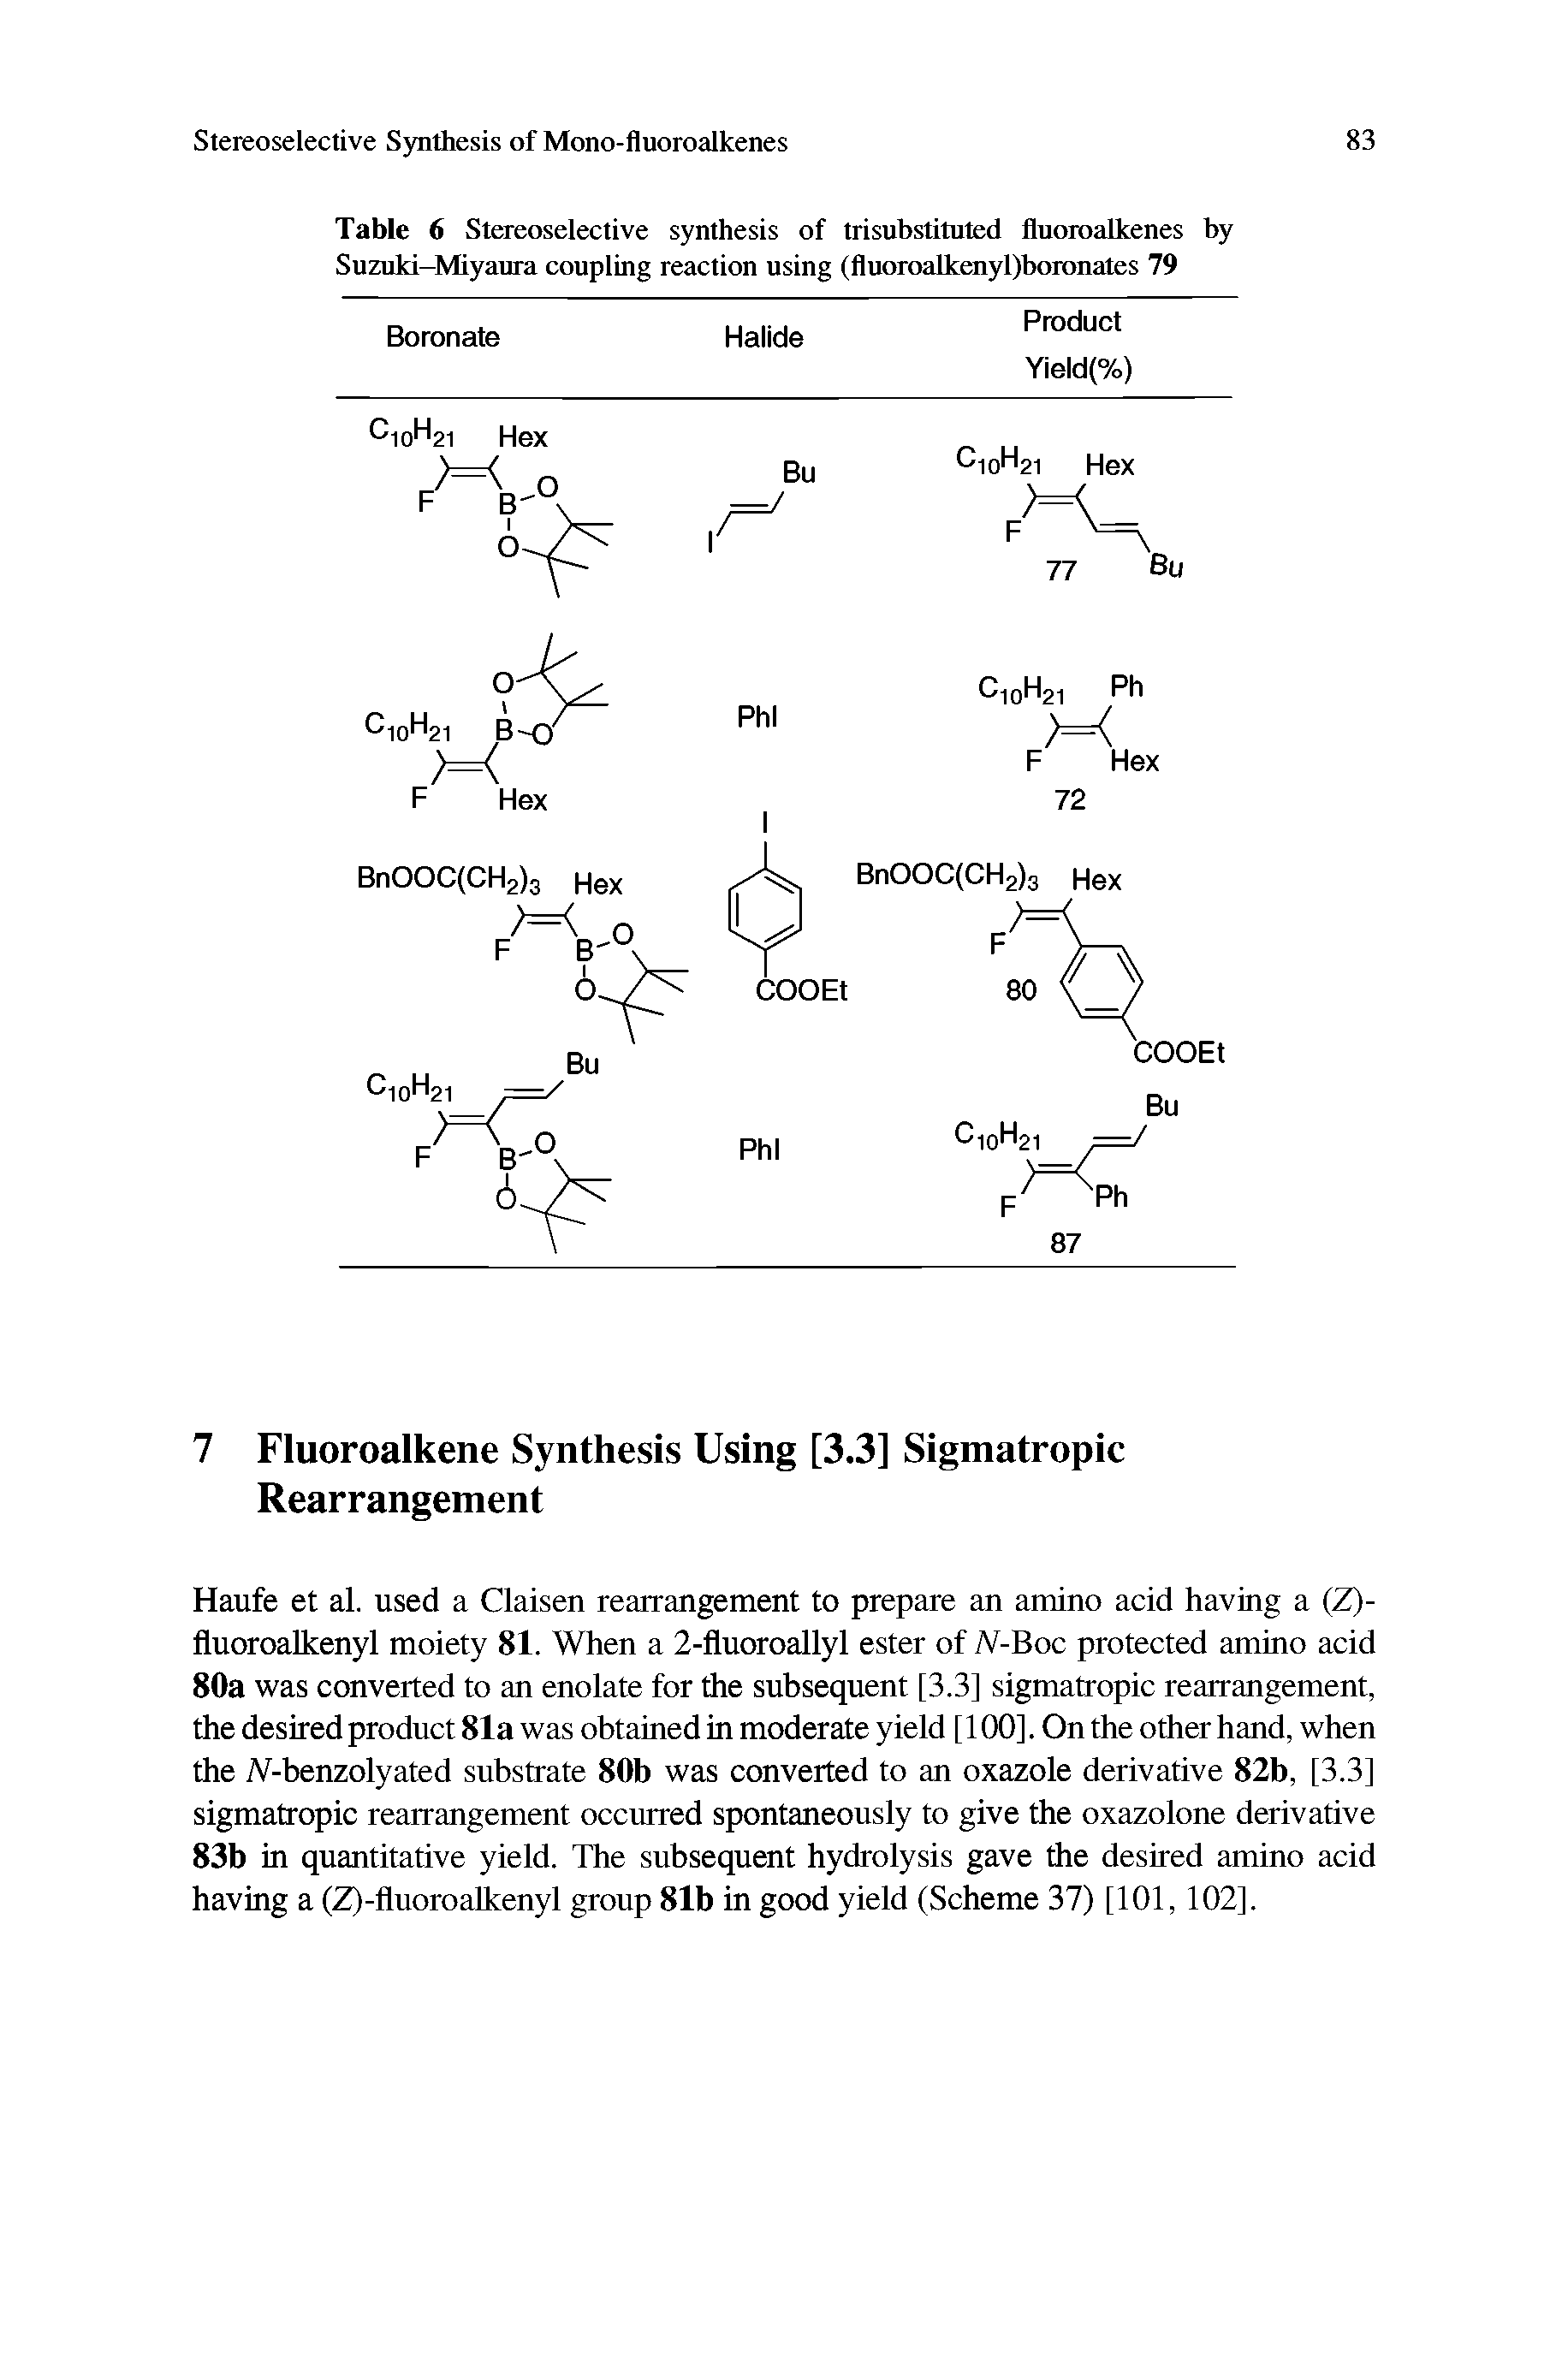 Table 6 Stereoselective synthesis of trisubstituted fluoroalkenes by Suzuki-Miyaura coupling reaction using (fluoroafkenyl)boronates 79...